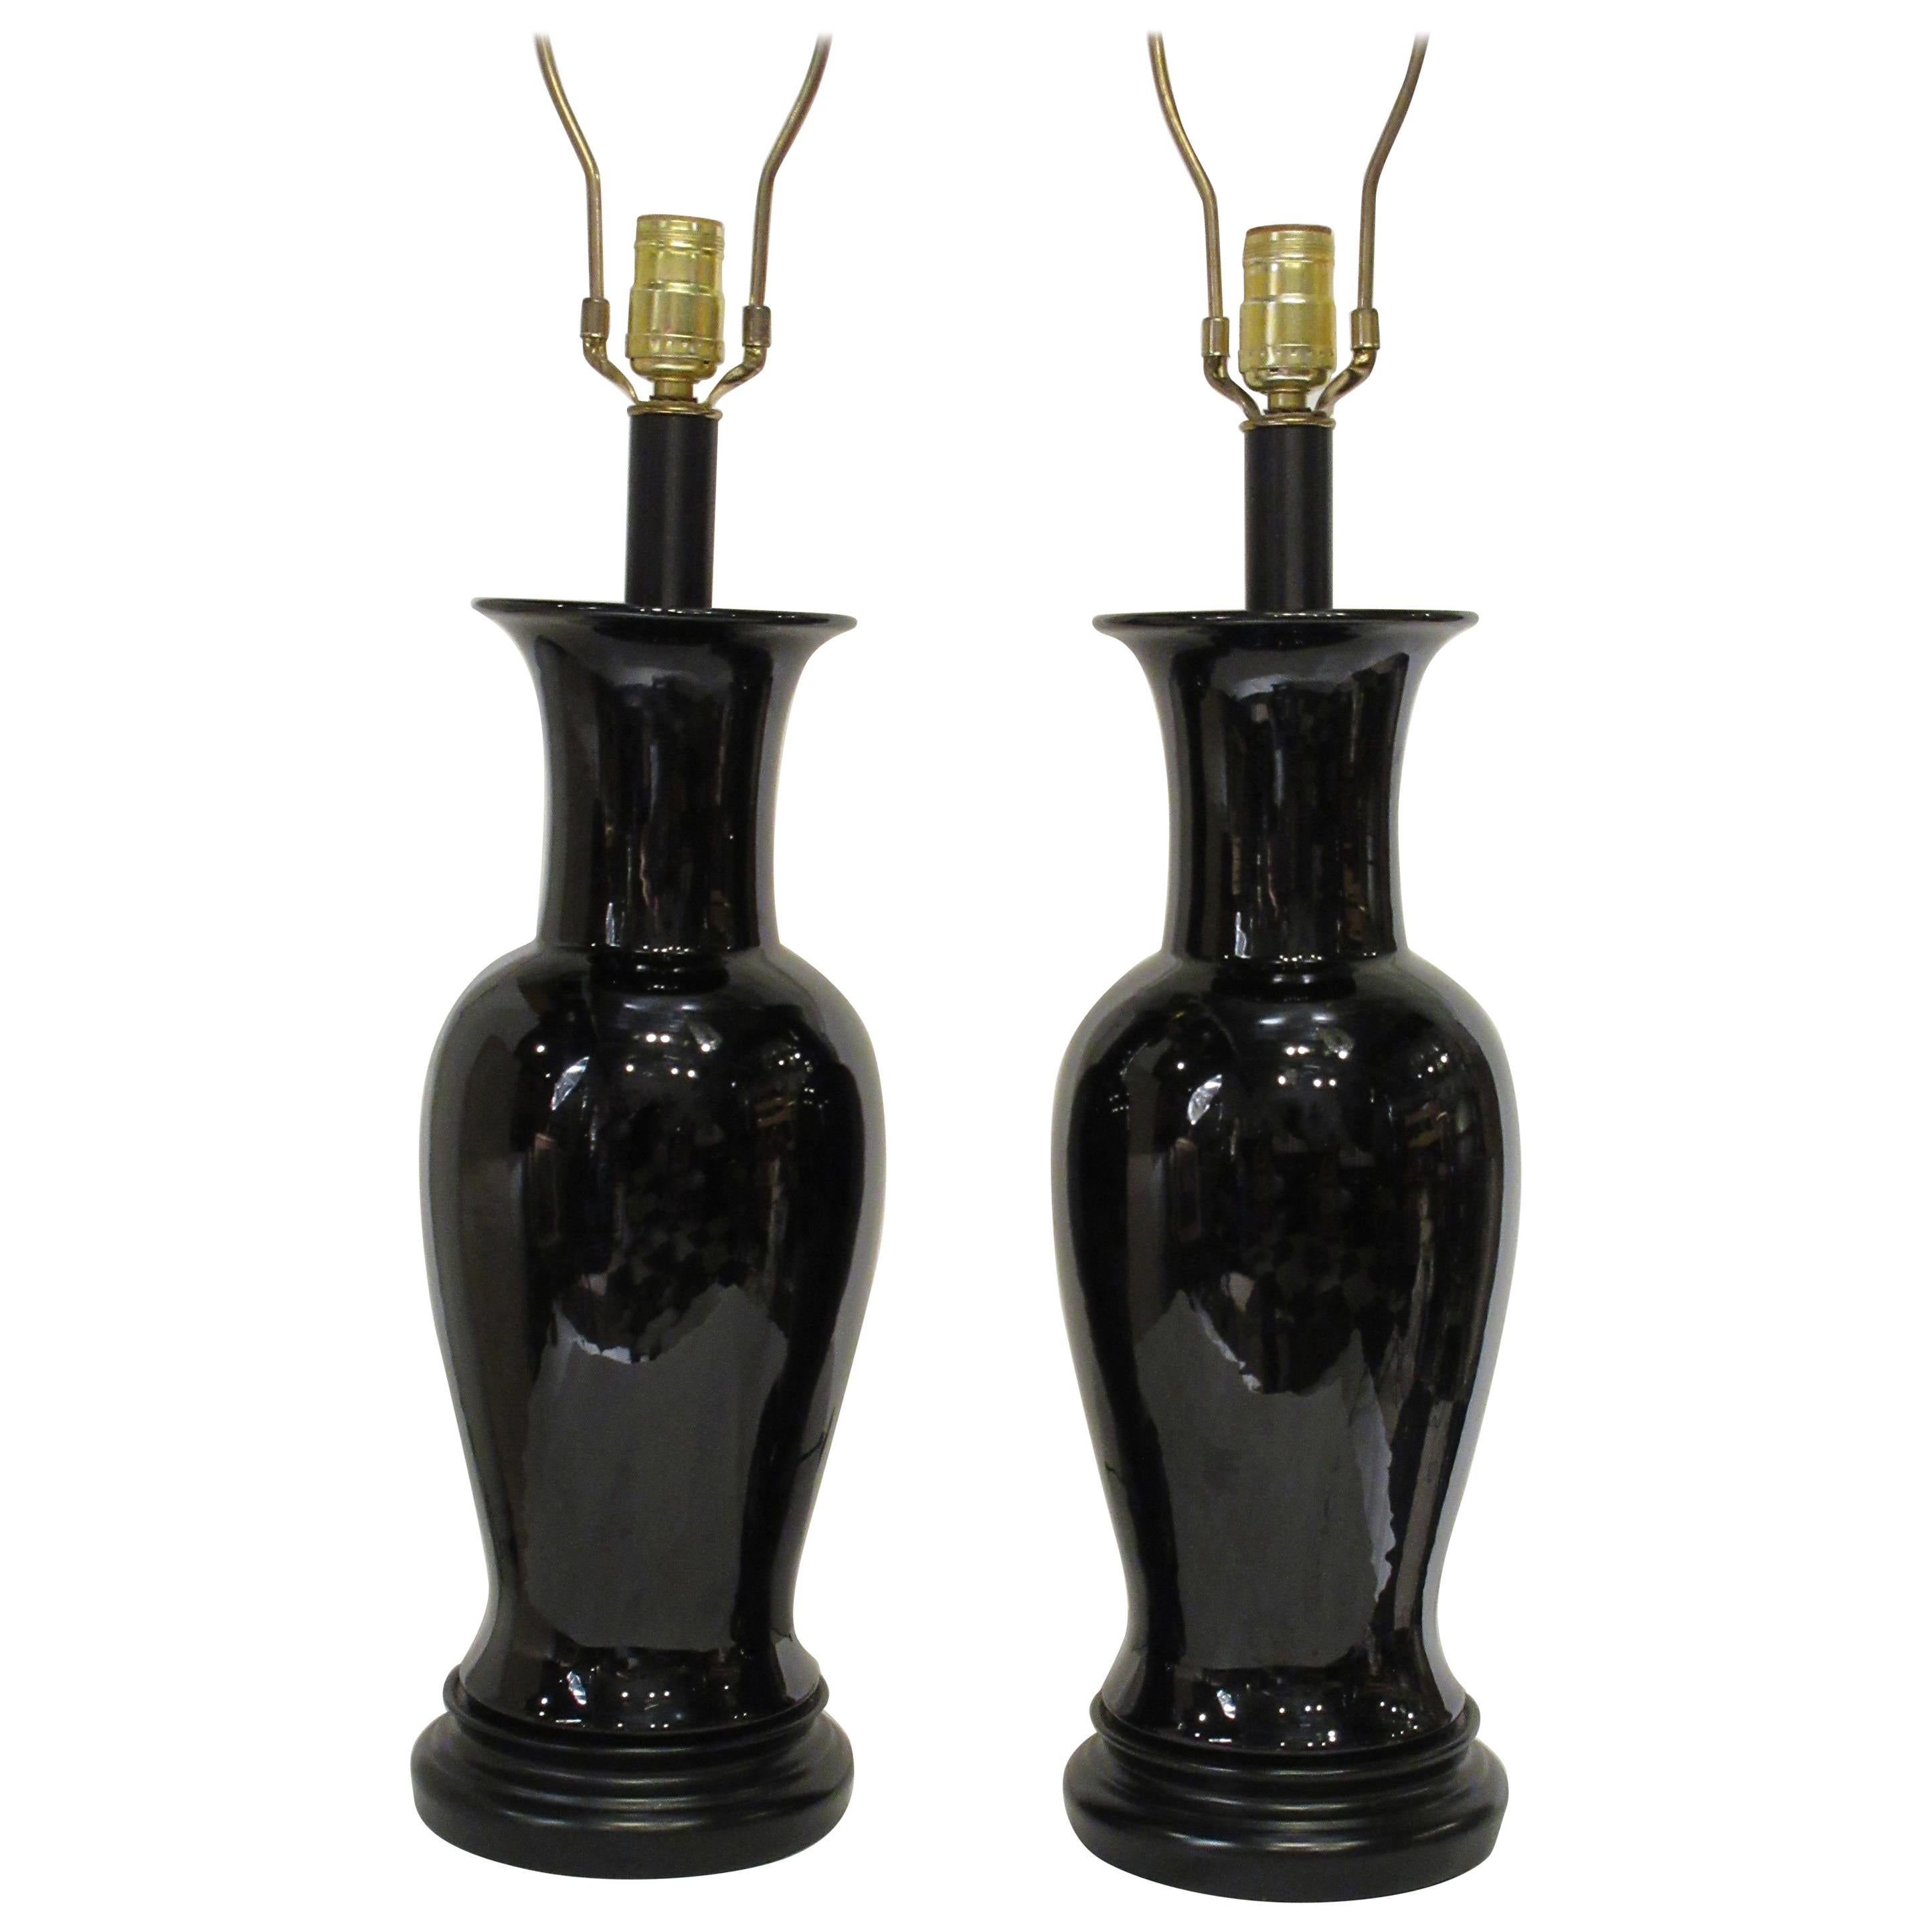 Pair of 1950s High Gloss Black Ginger Jar Lamps